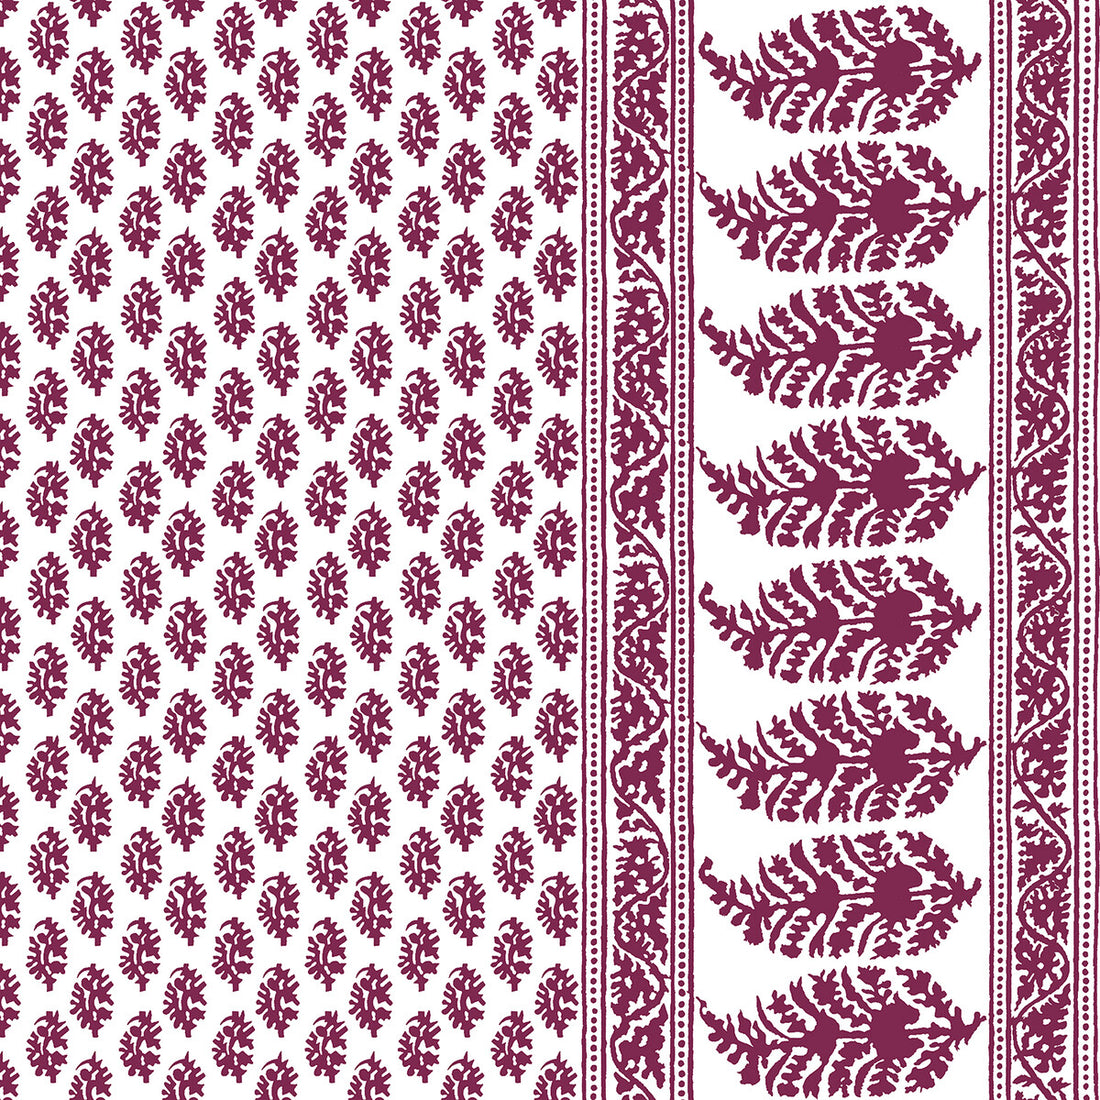 Aravaquita fabric in burdeos color - pattern LCT1028.003.0 - by Gaston y Daniela in the Lorenzo Castillo V collection